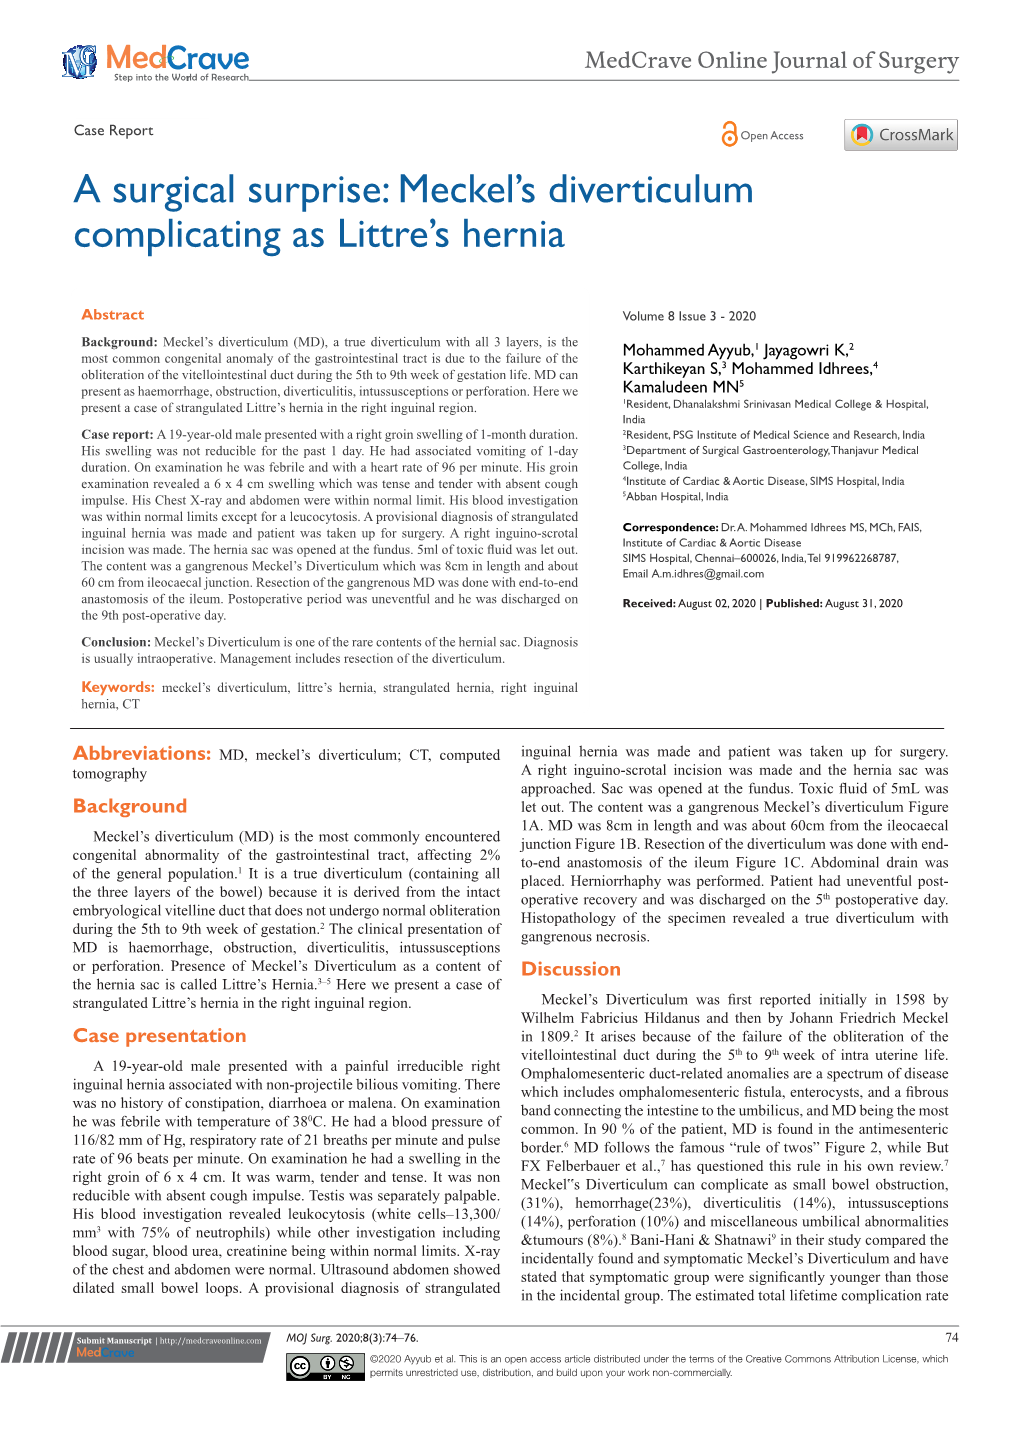 Meckel's Diverticulum Complicating As Littre's Hernia